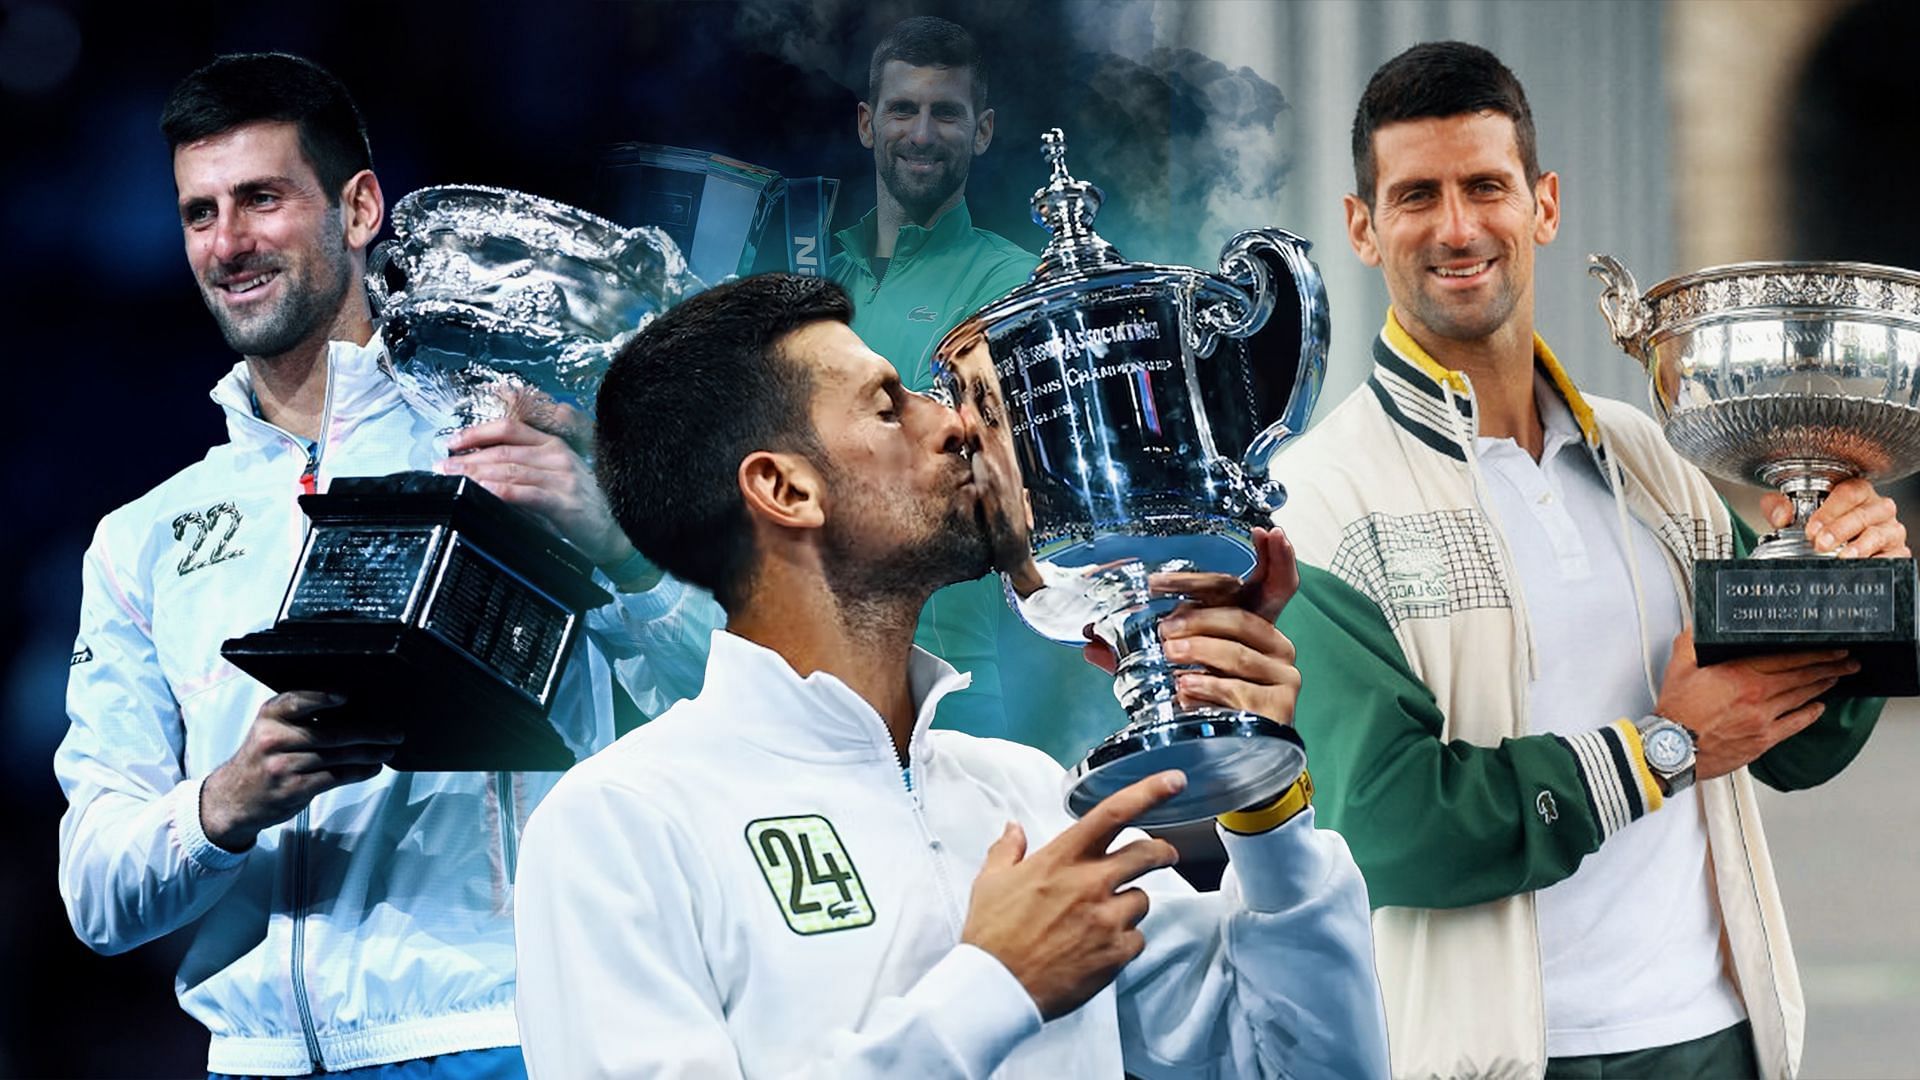 Novak Djokovic turned pro in the year 2003.